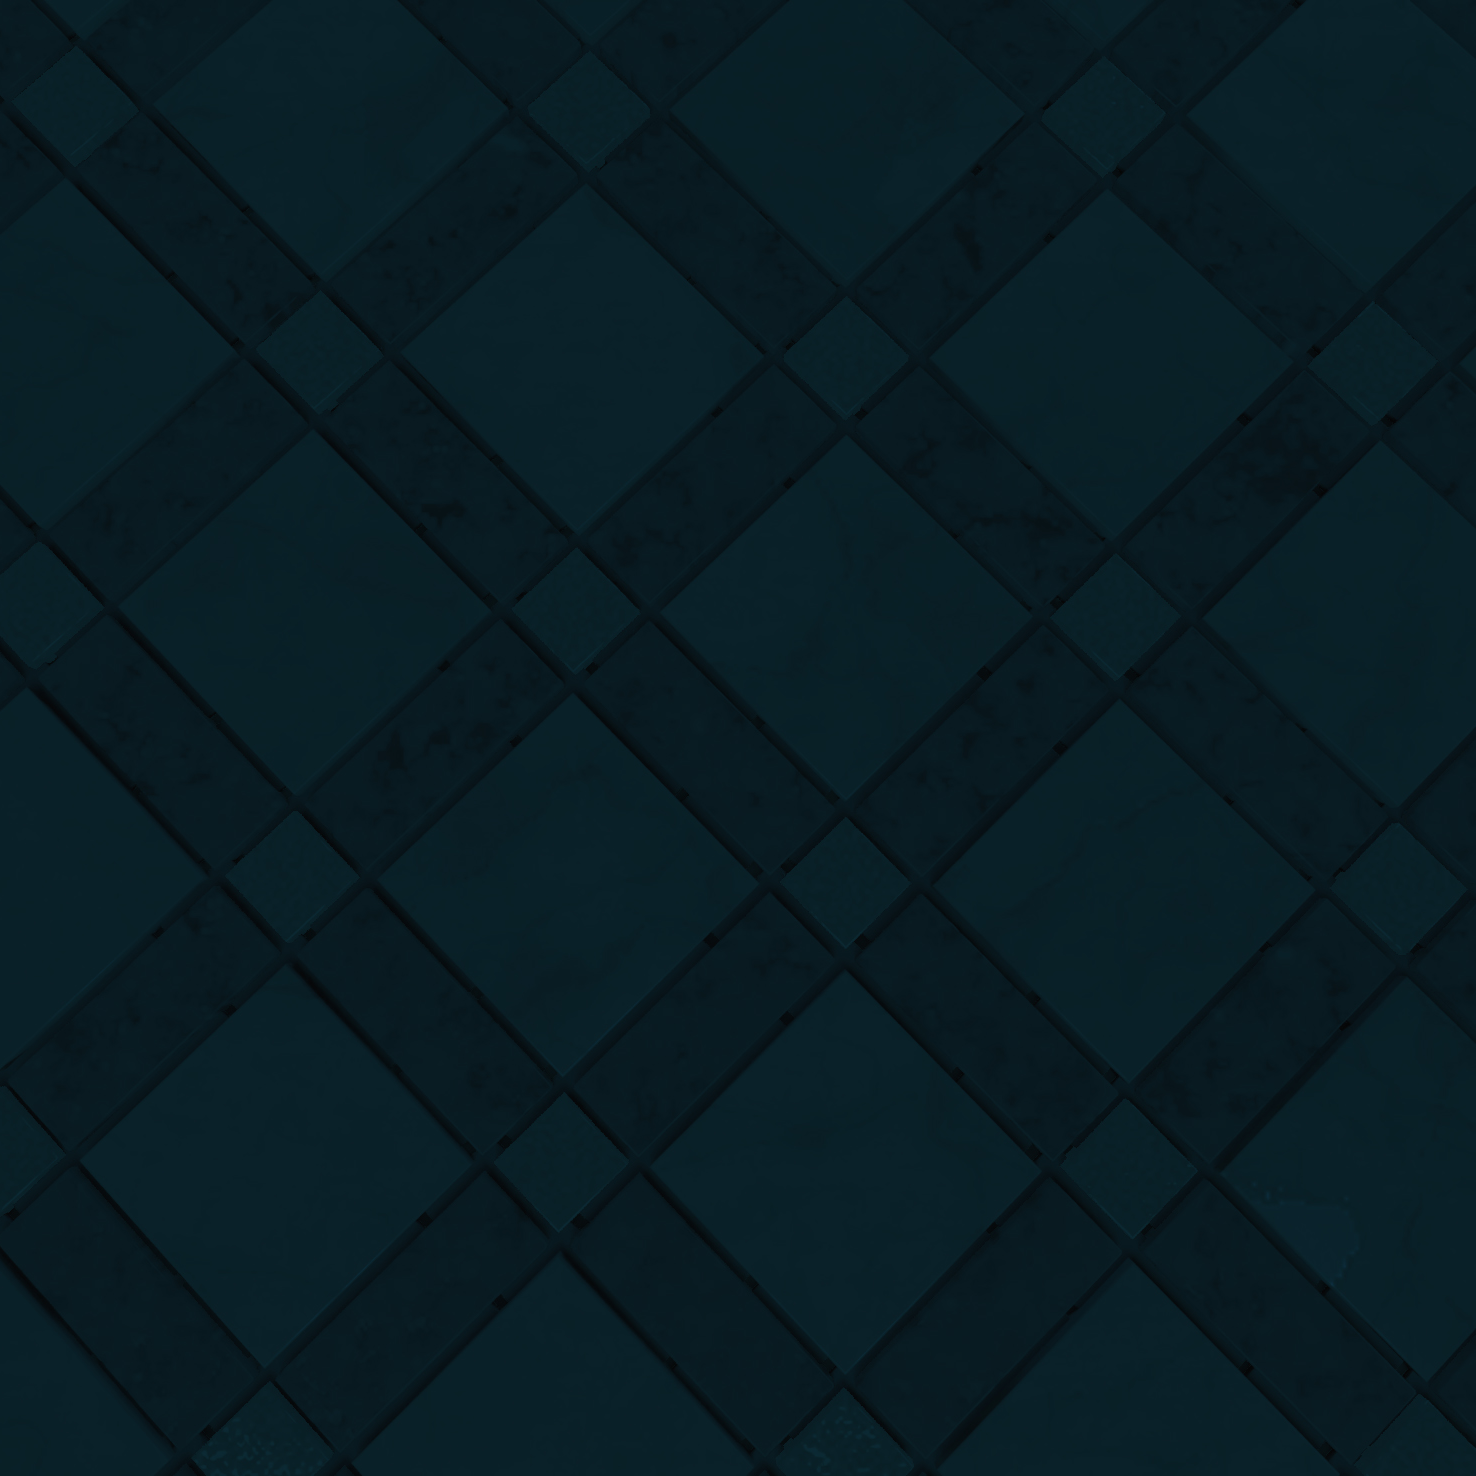 pps-dark-tile-pattern-square